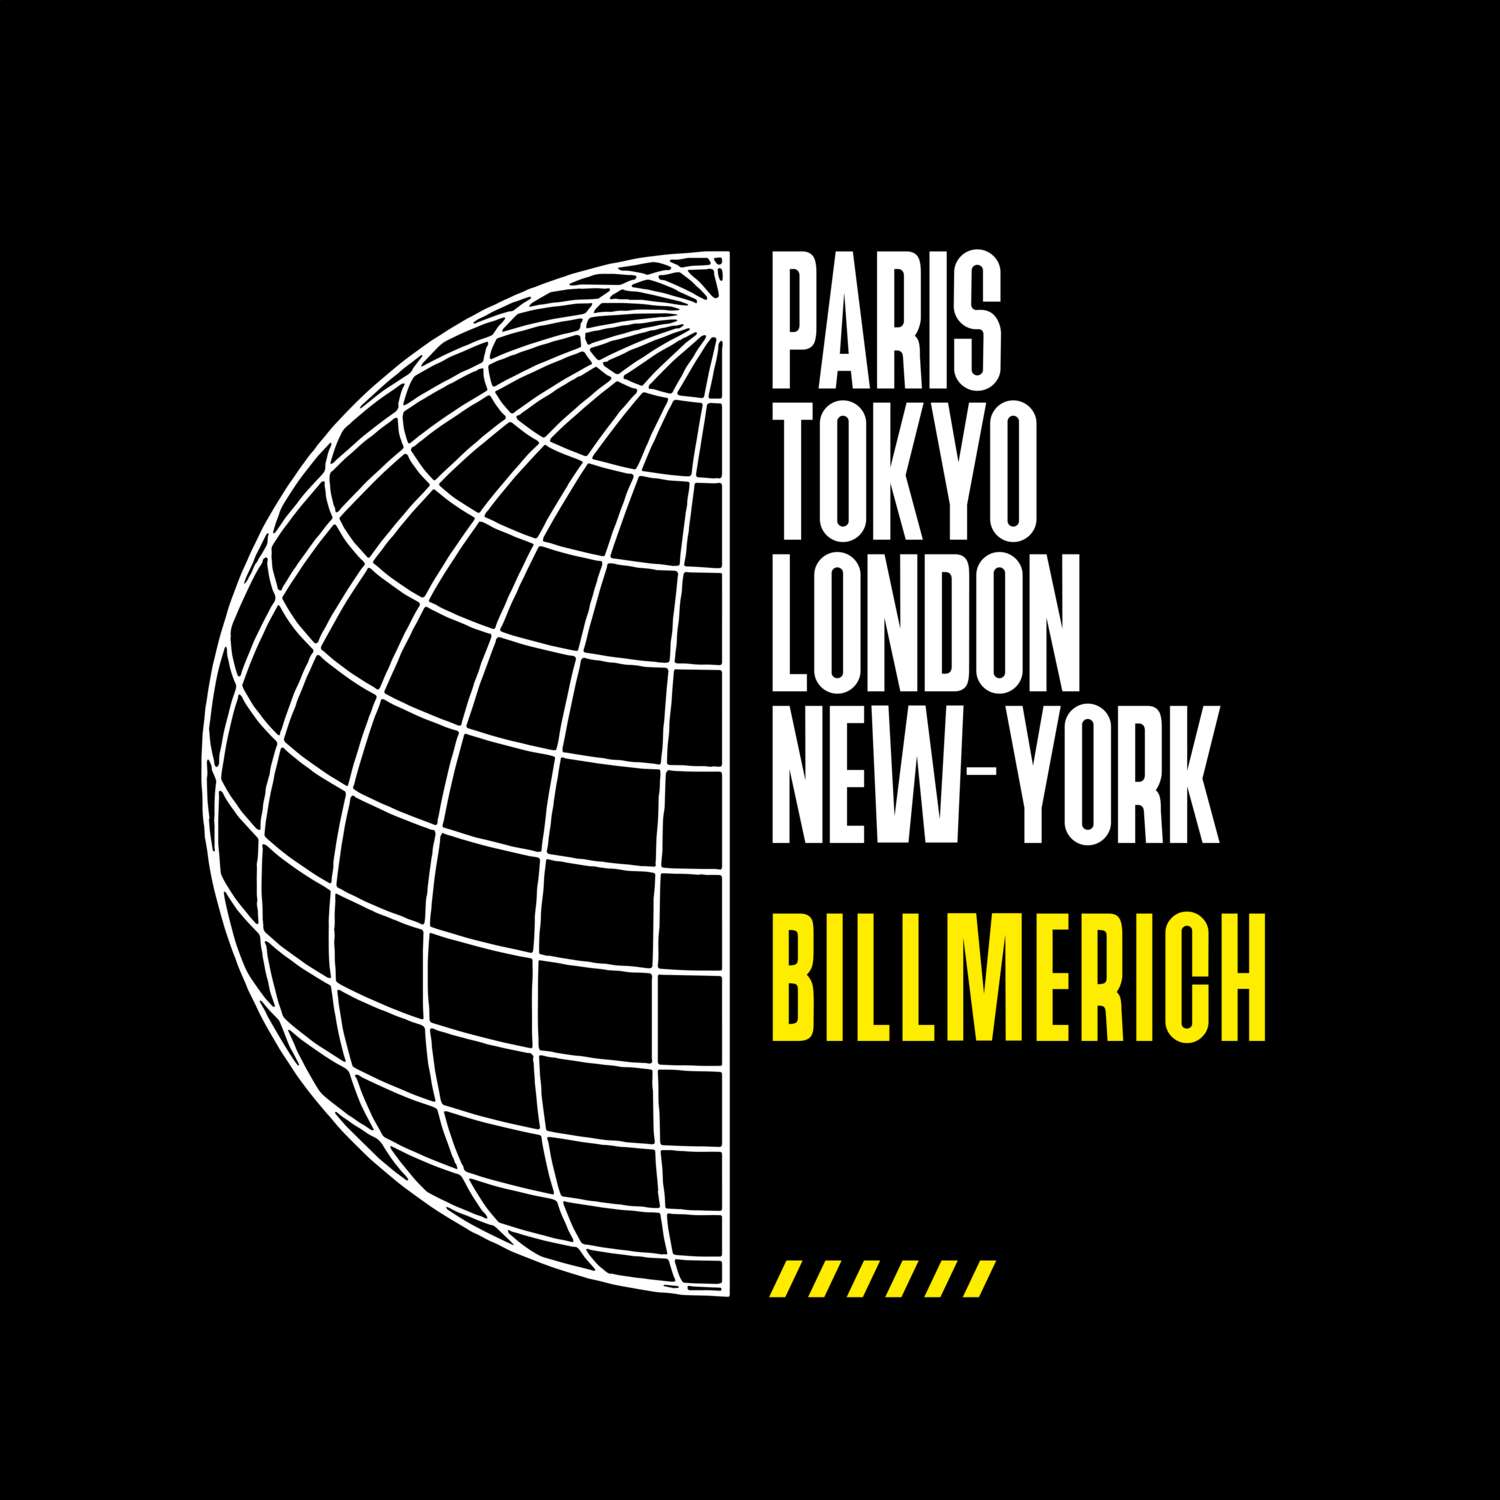 Billmerich T-Shirt »Paris Tokyo London«